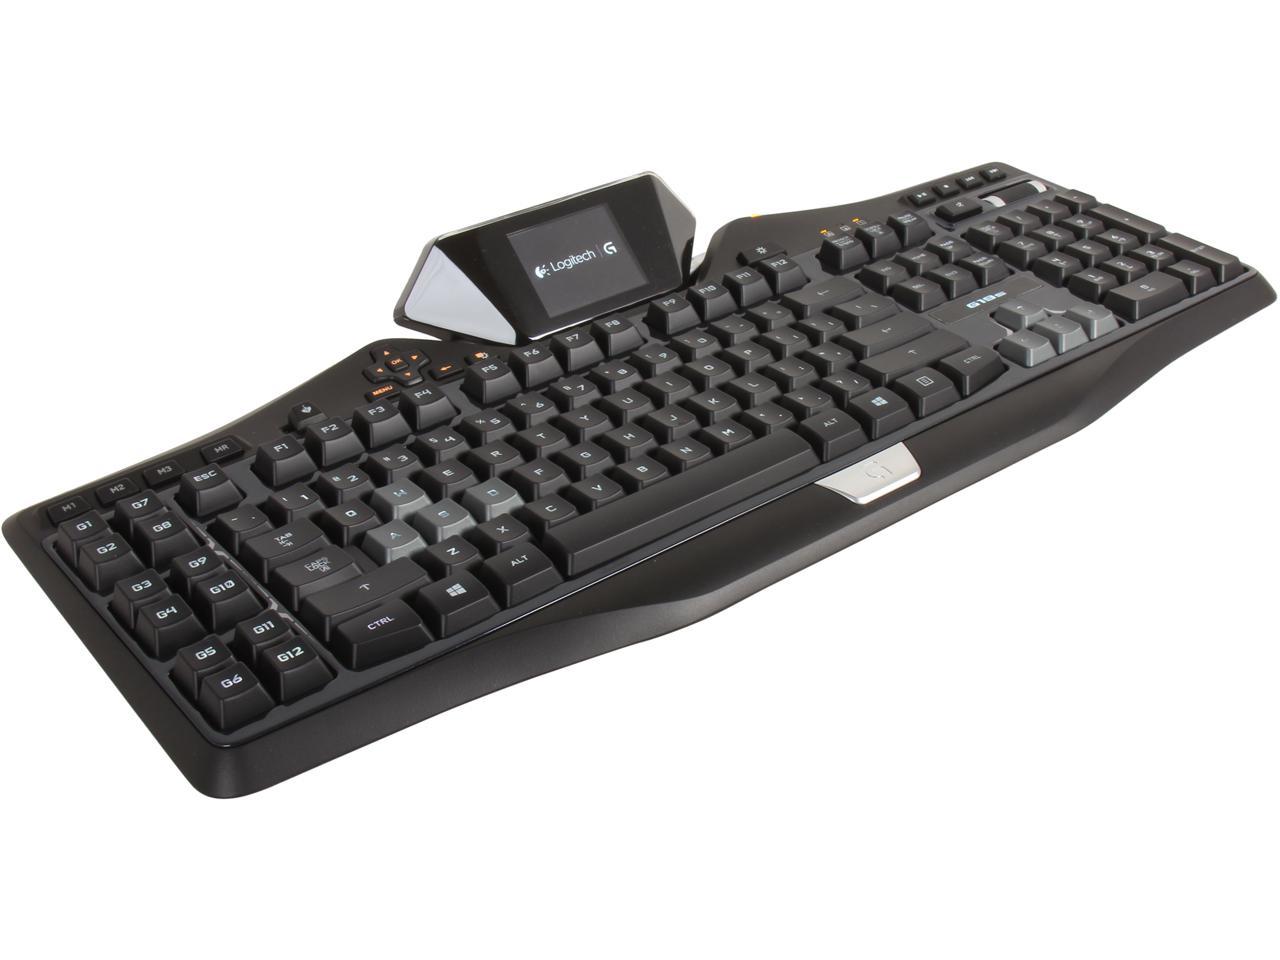 G 19 s. Logitech g19s. Logitech g19 Keyboard for Gaming Black USB. Logitech 920. Logitech g19 Keyboard for Gaming Black USB характеристики.